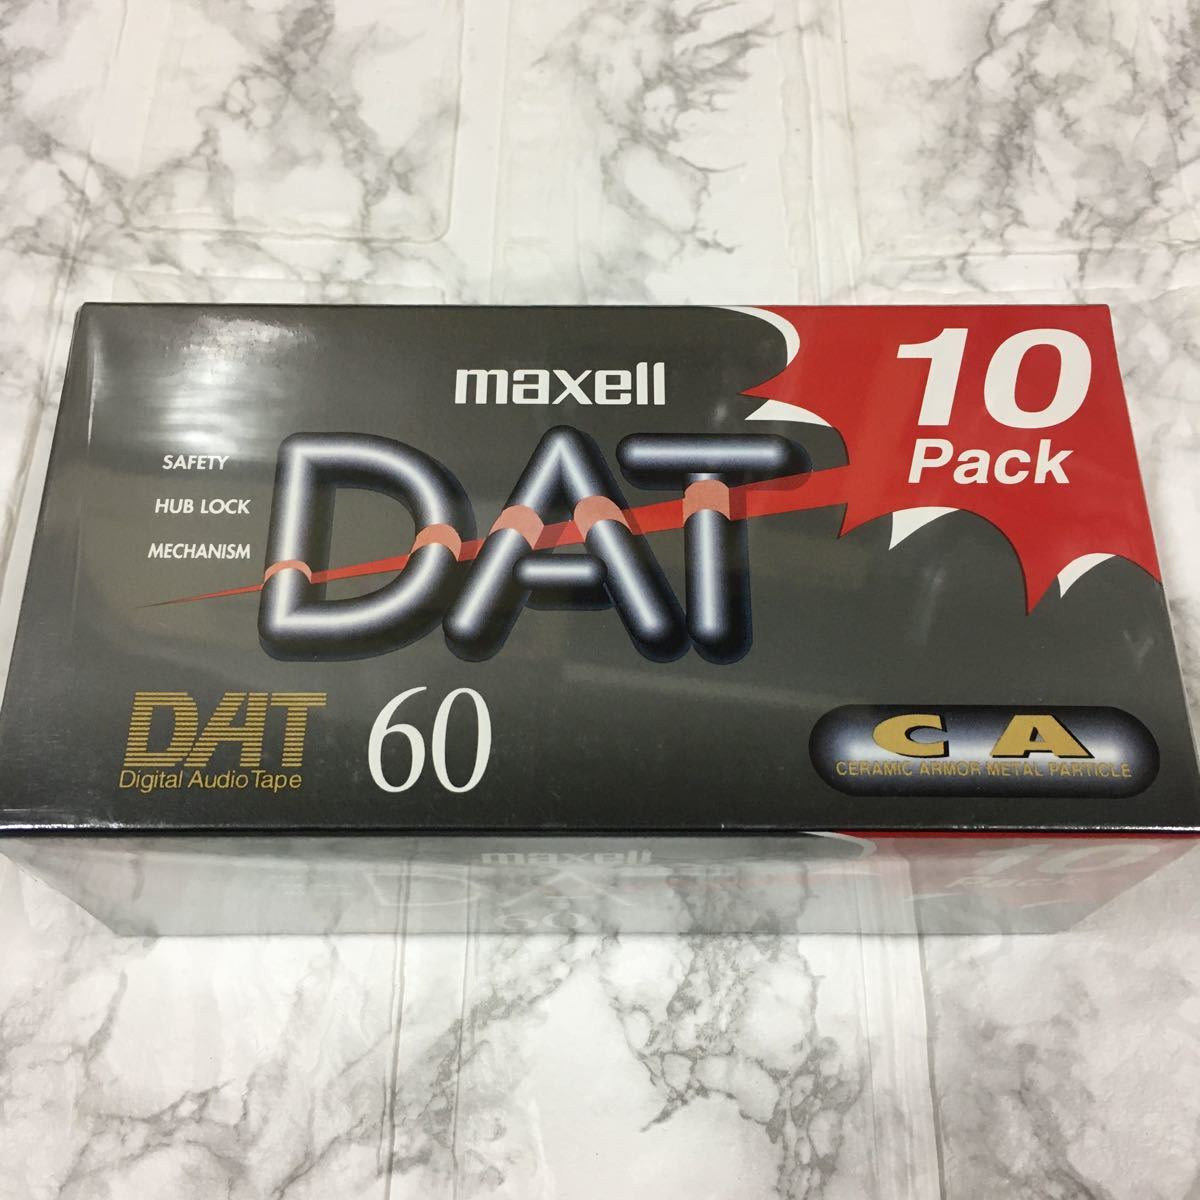 maxell DAT デジタルオーディオ マクセル 60